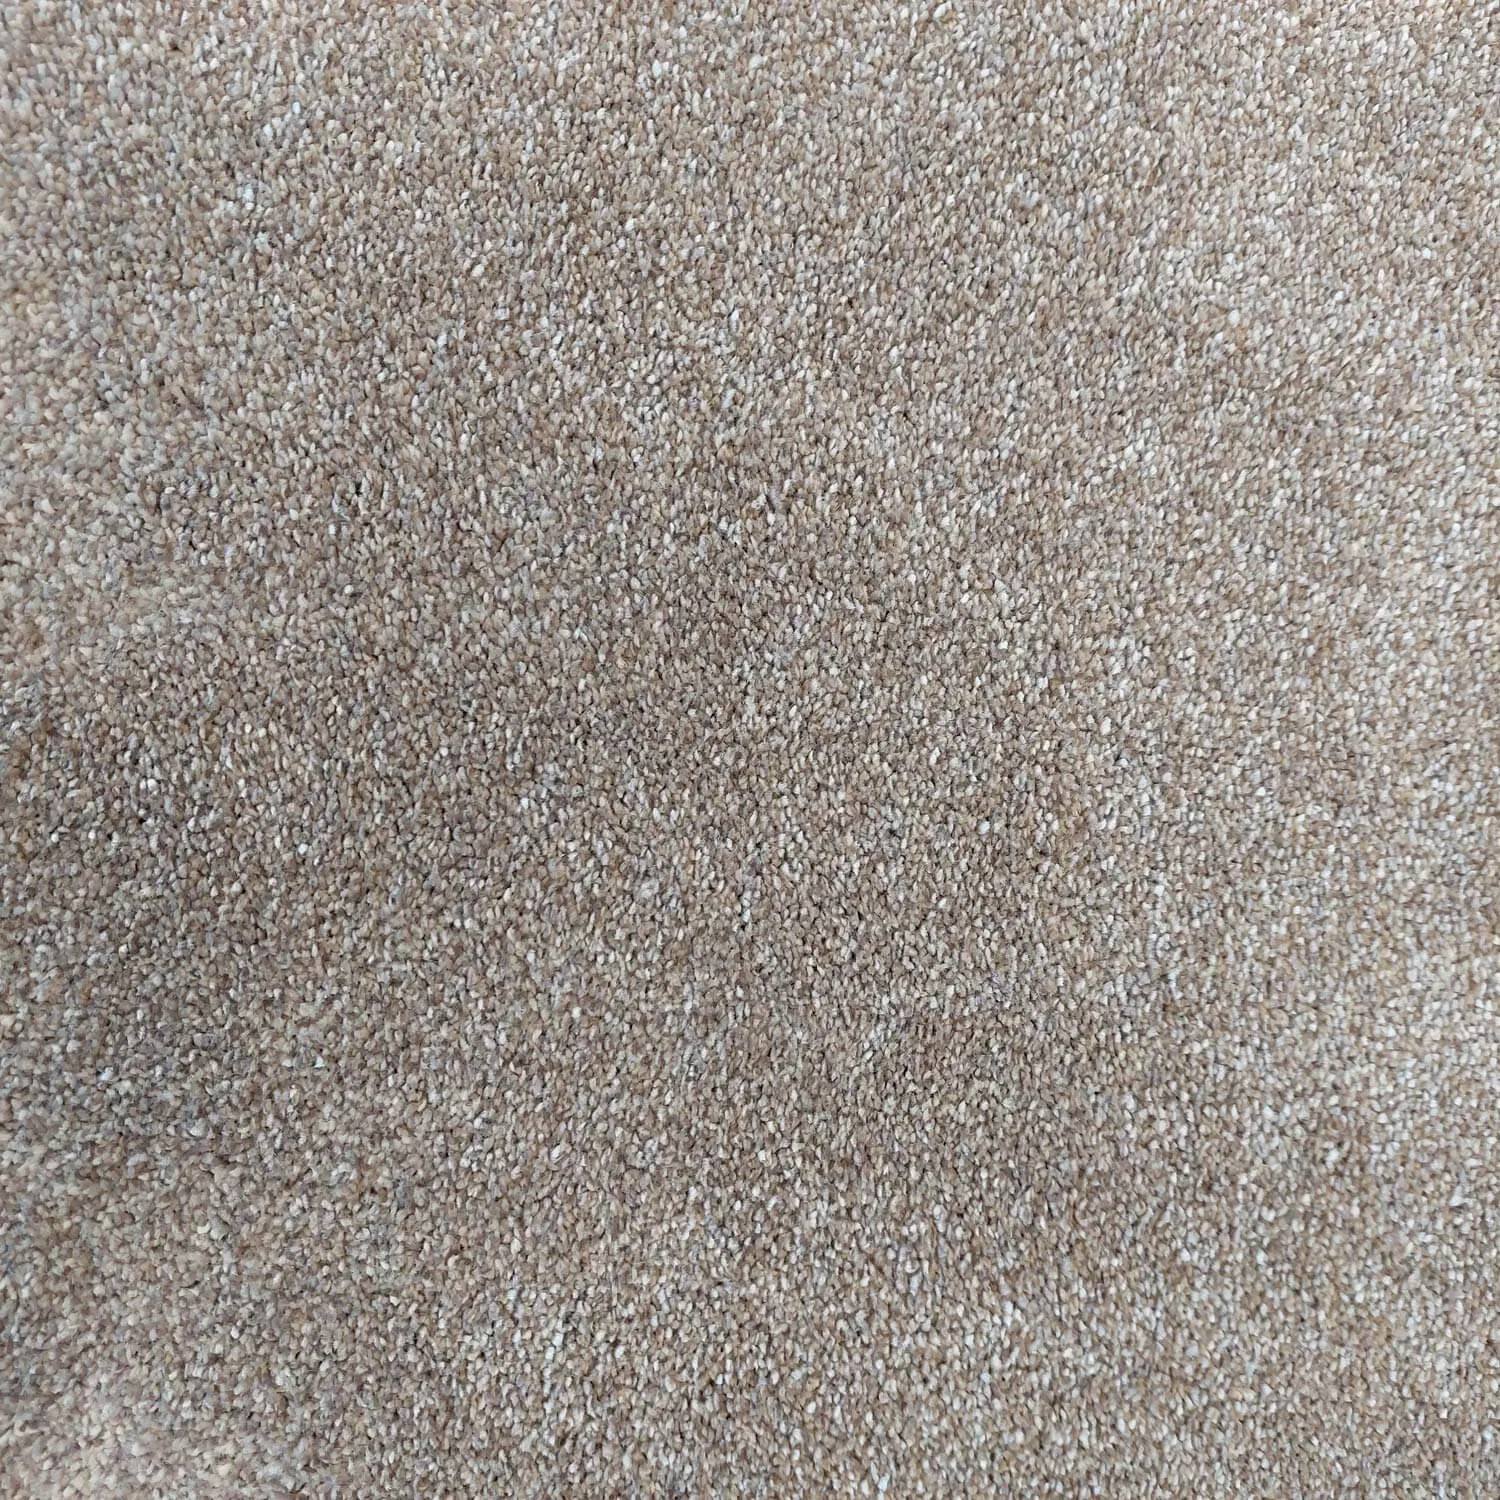 Caress Saxony Carpet - 694 Oyster Beige